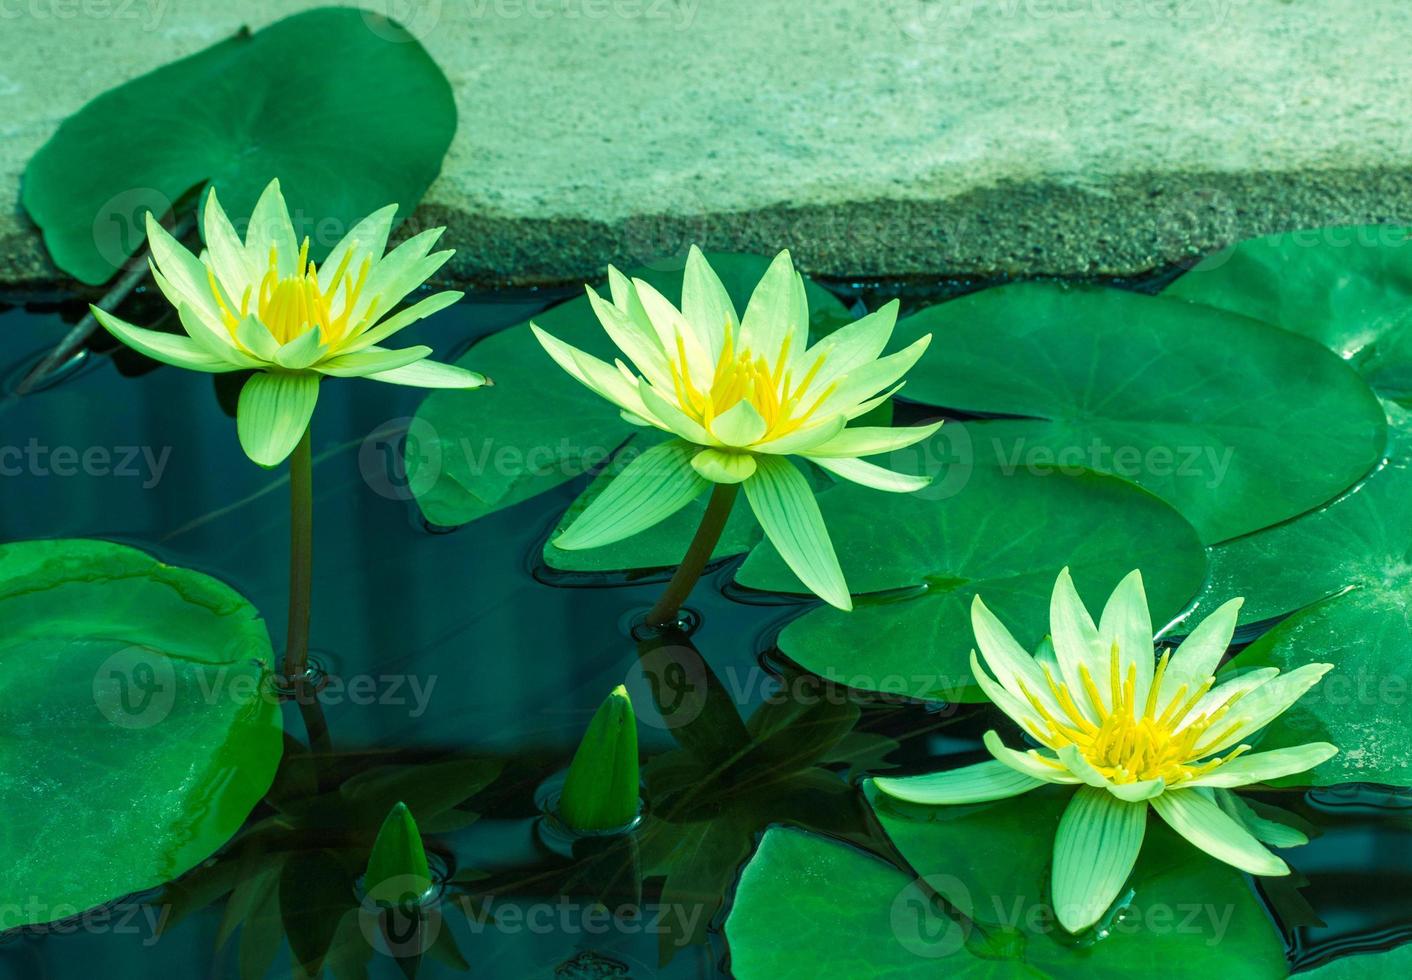 linda nenúfar amarela ou flor de lótus na lagoa foto